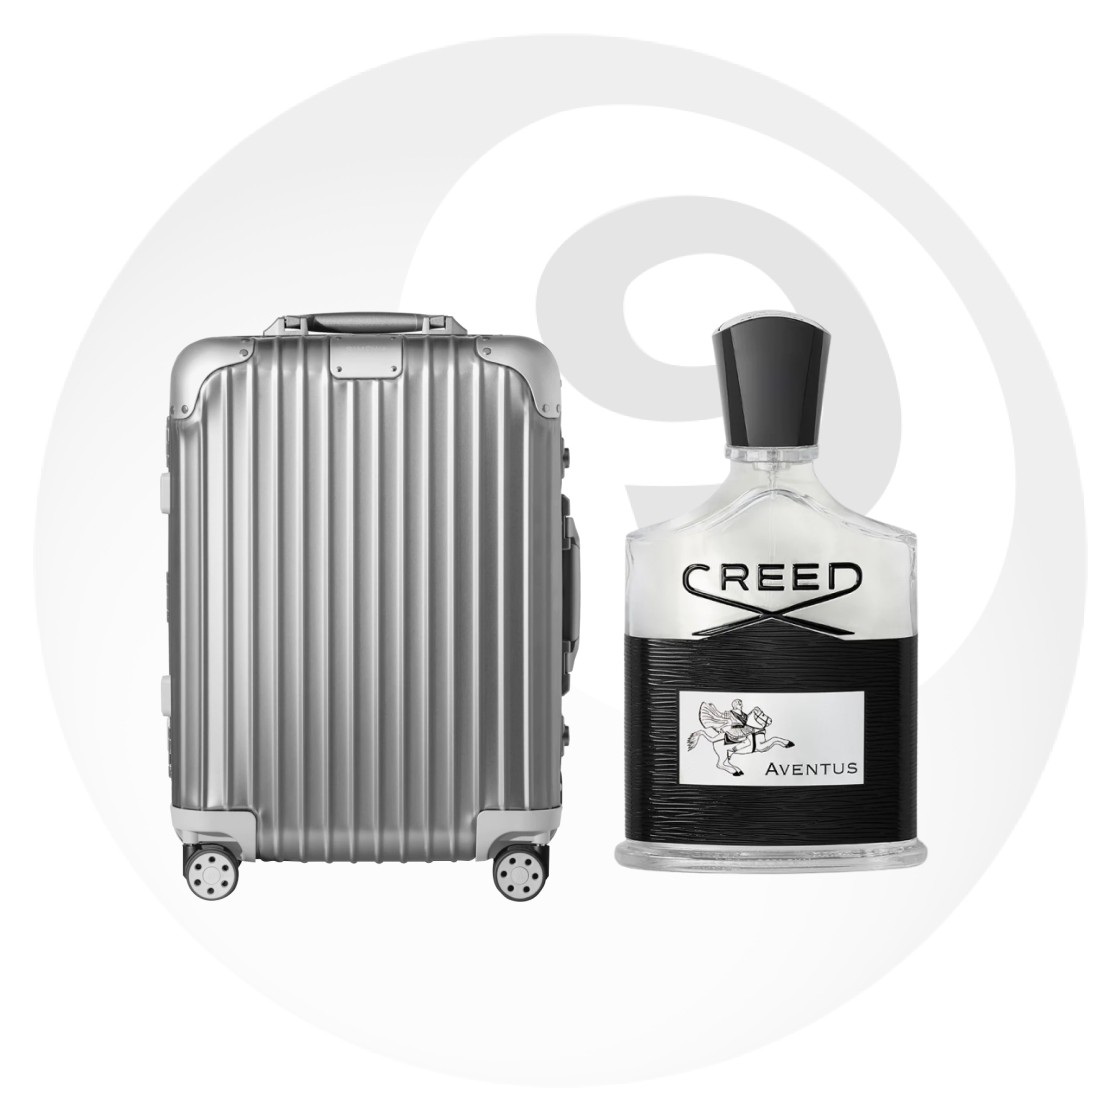 Rimowa Original Cabin + Creed Eau De Parfum Full Set